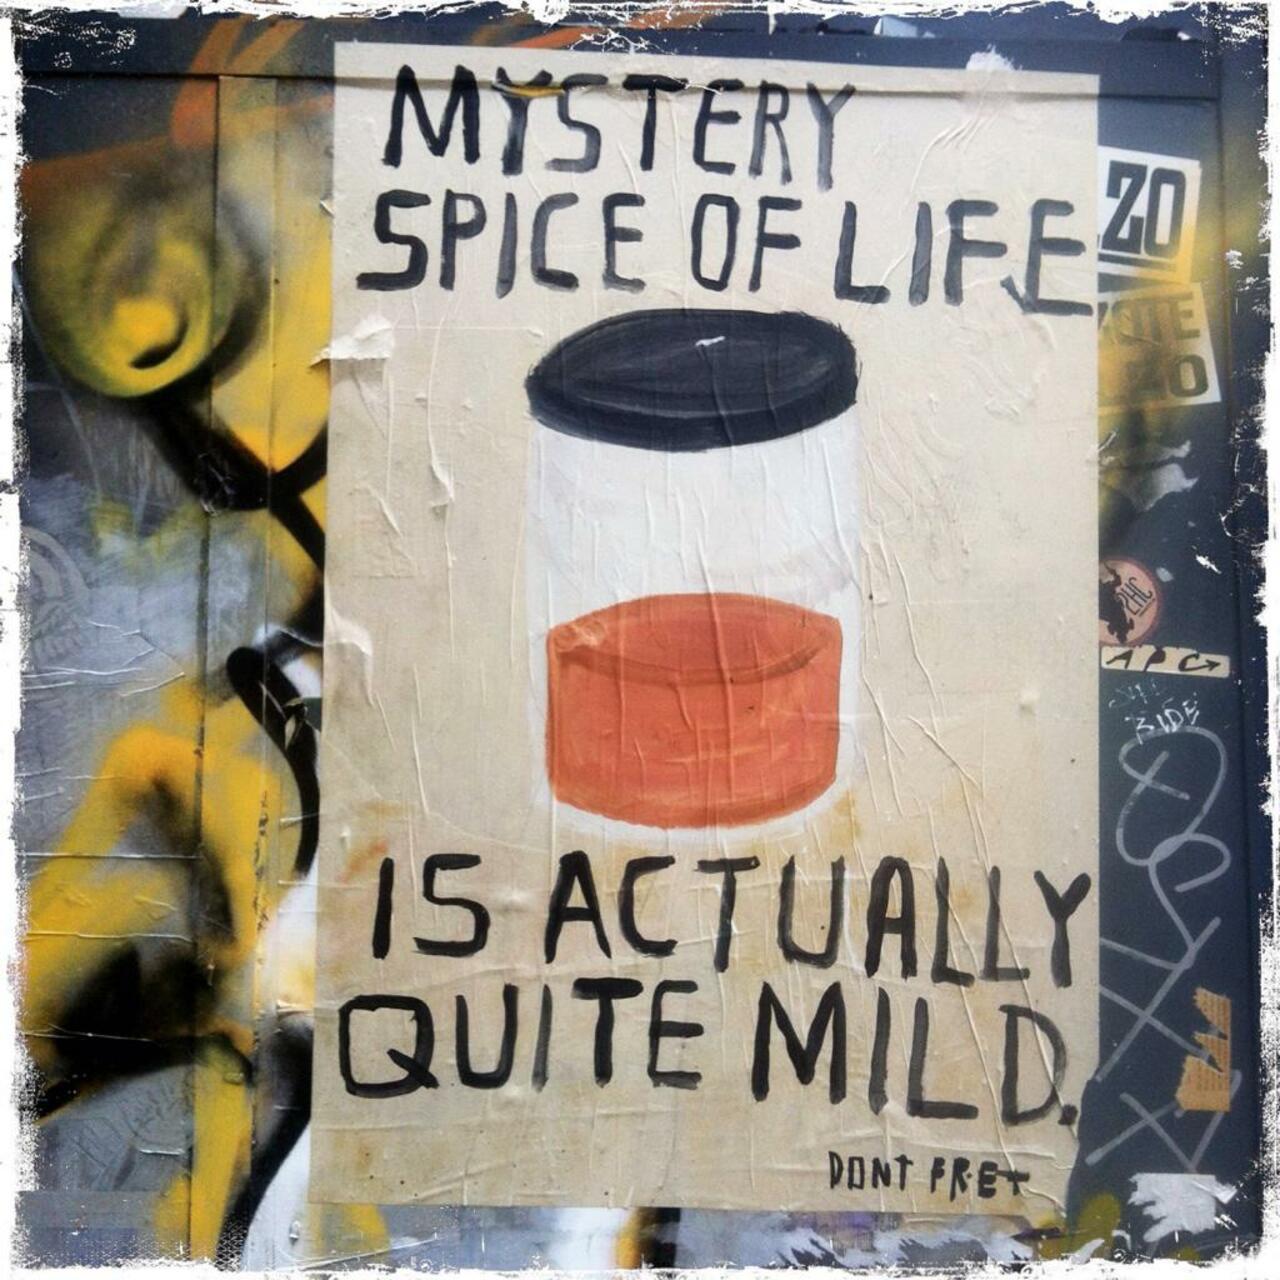 Mystery spice of life.... Paste-up by Don't Fret 

#streetart #art #graffiti http://t.co/jSDn9HXP1c